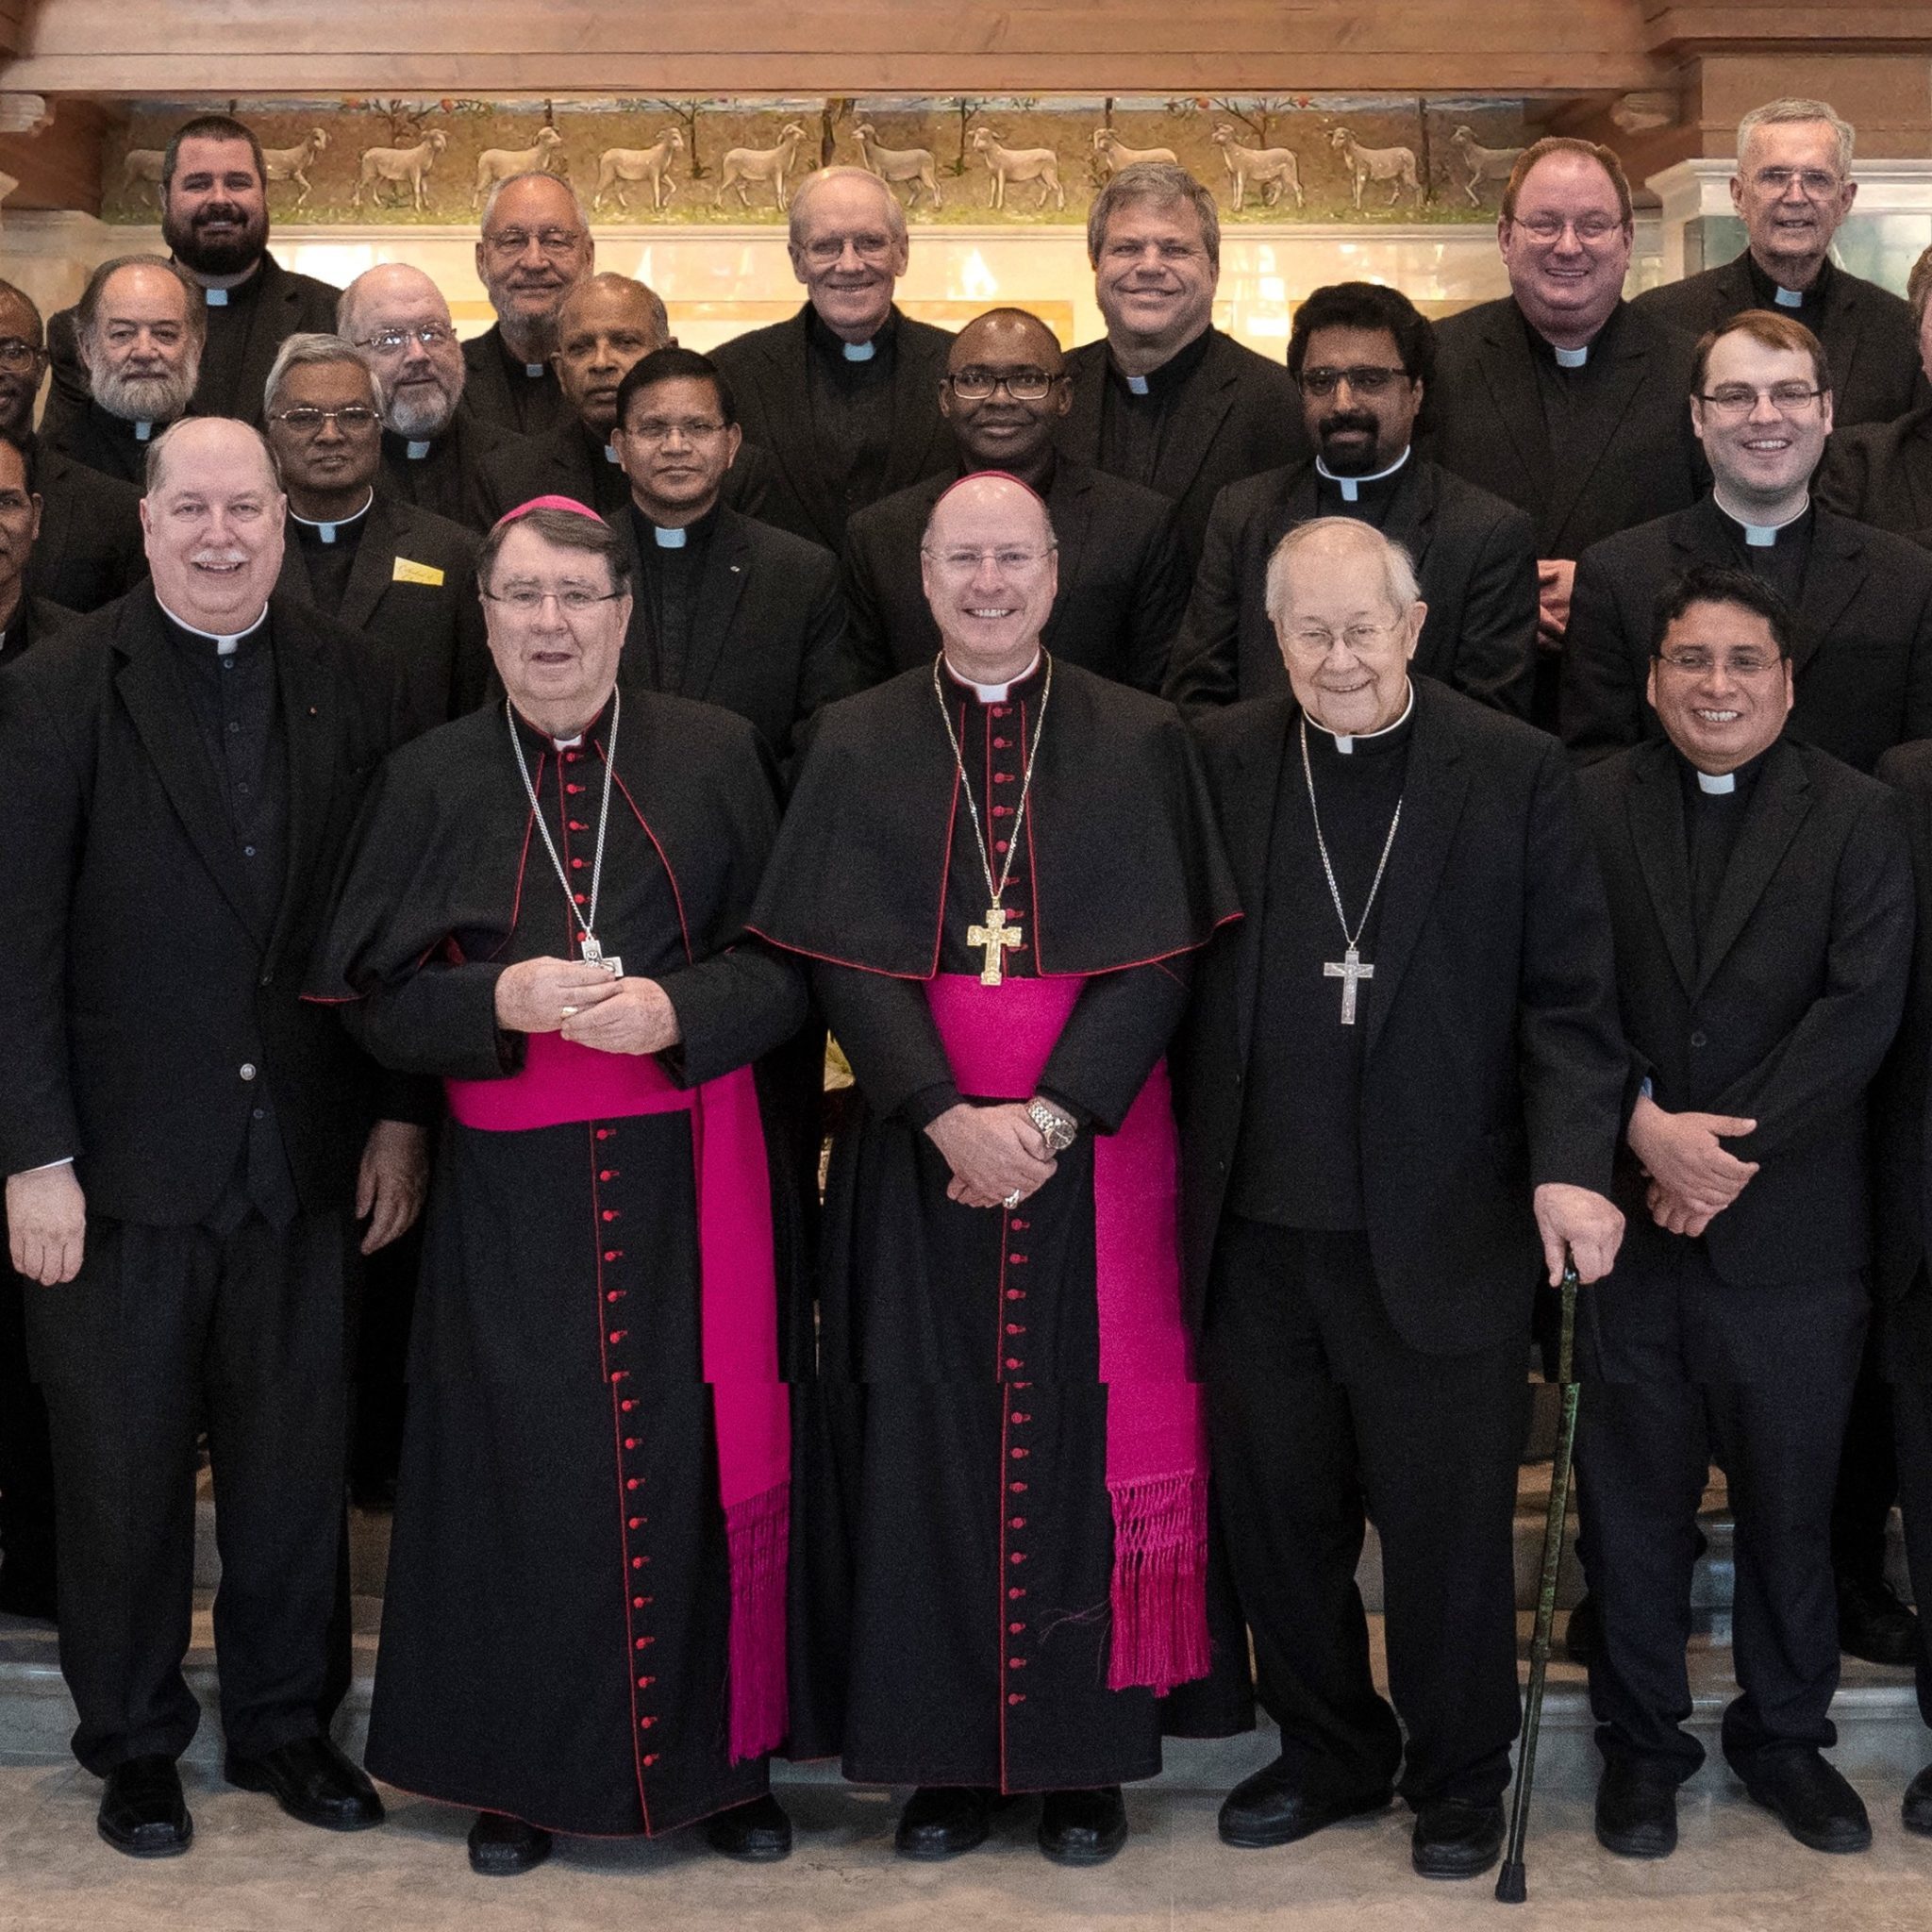 Priest group photo